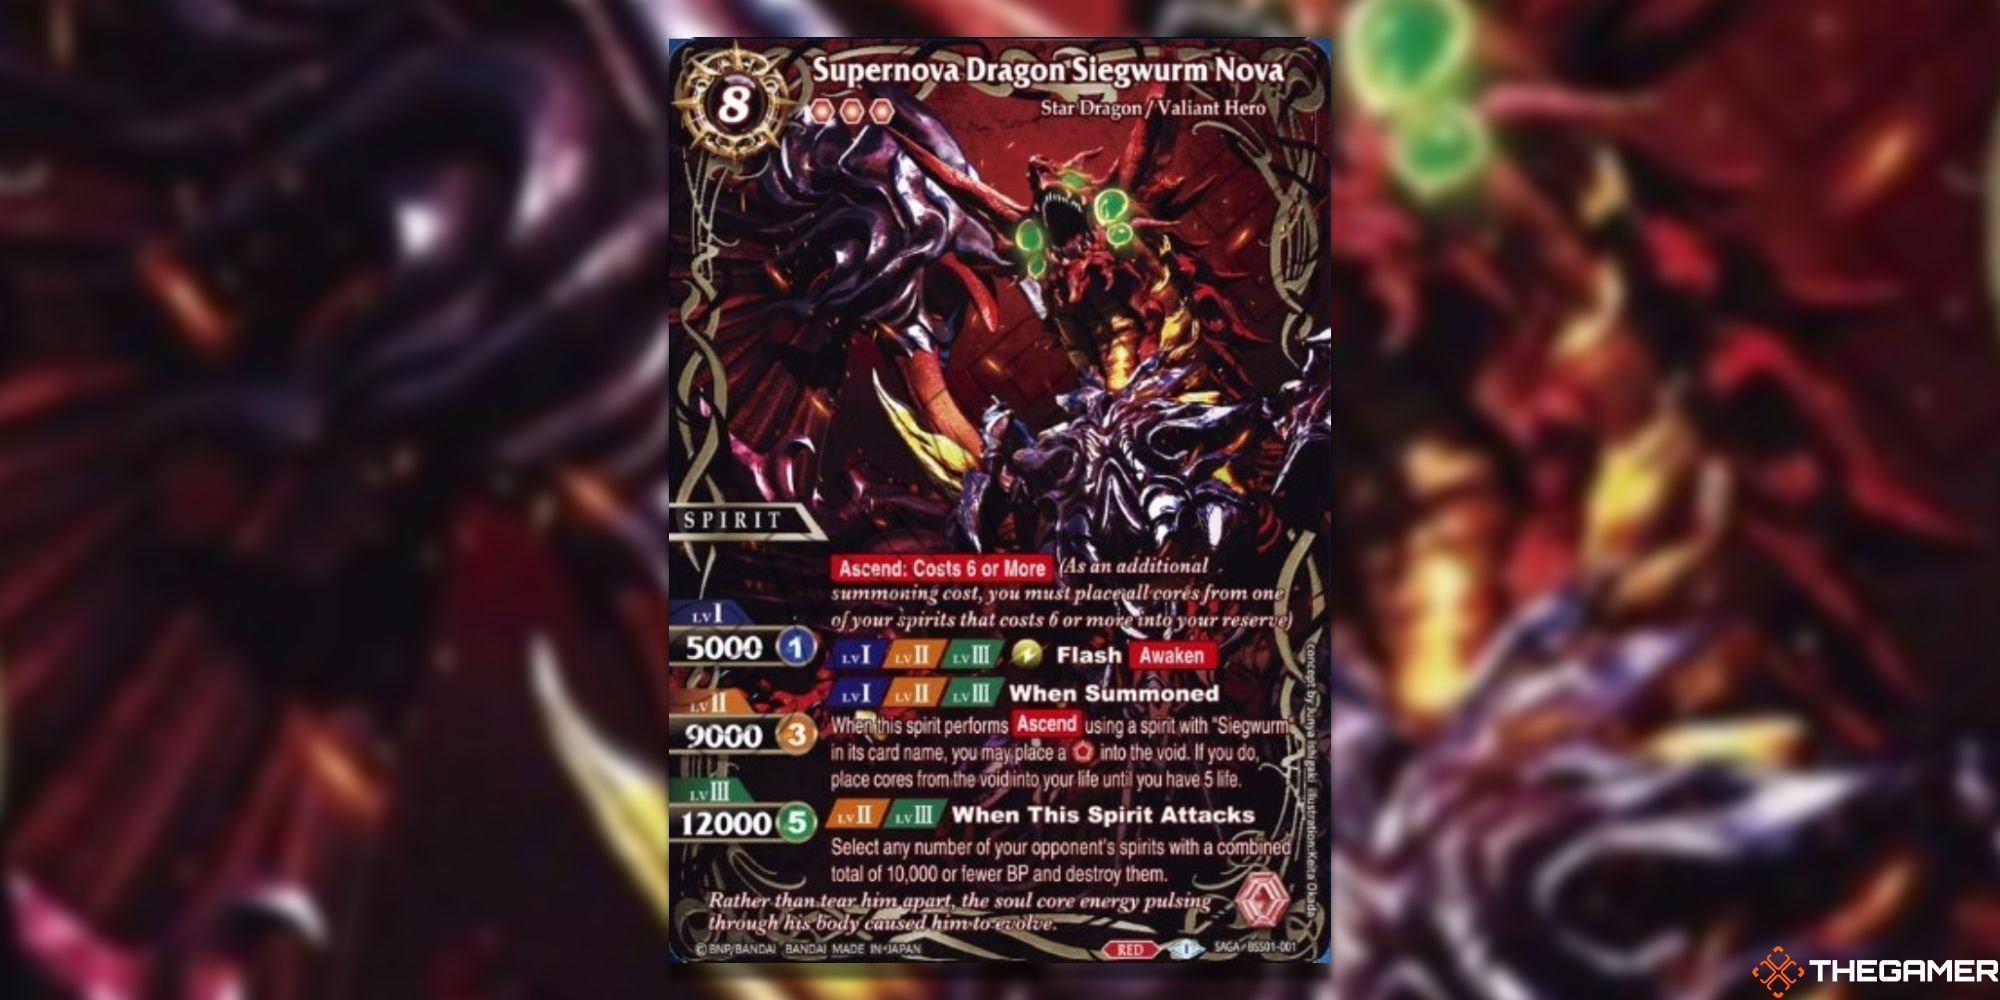 Supernova Dragon Siegwurm Nova Card from Battle Spirits Saga